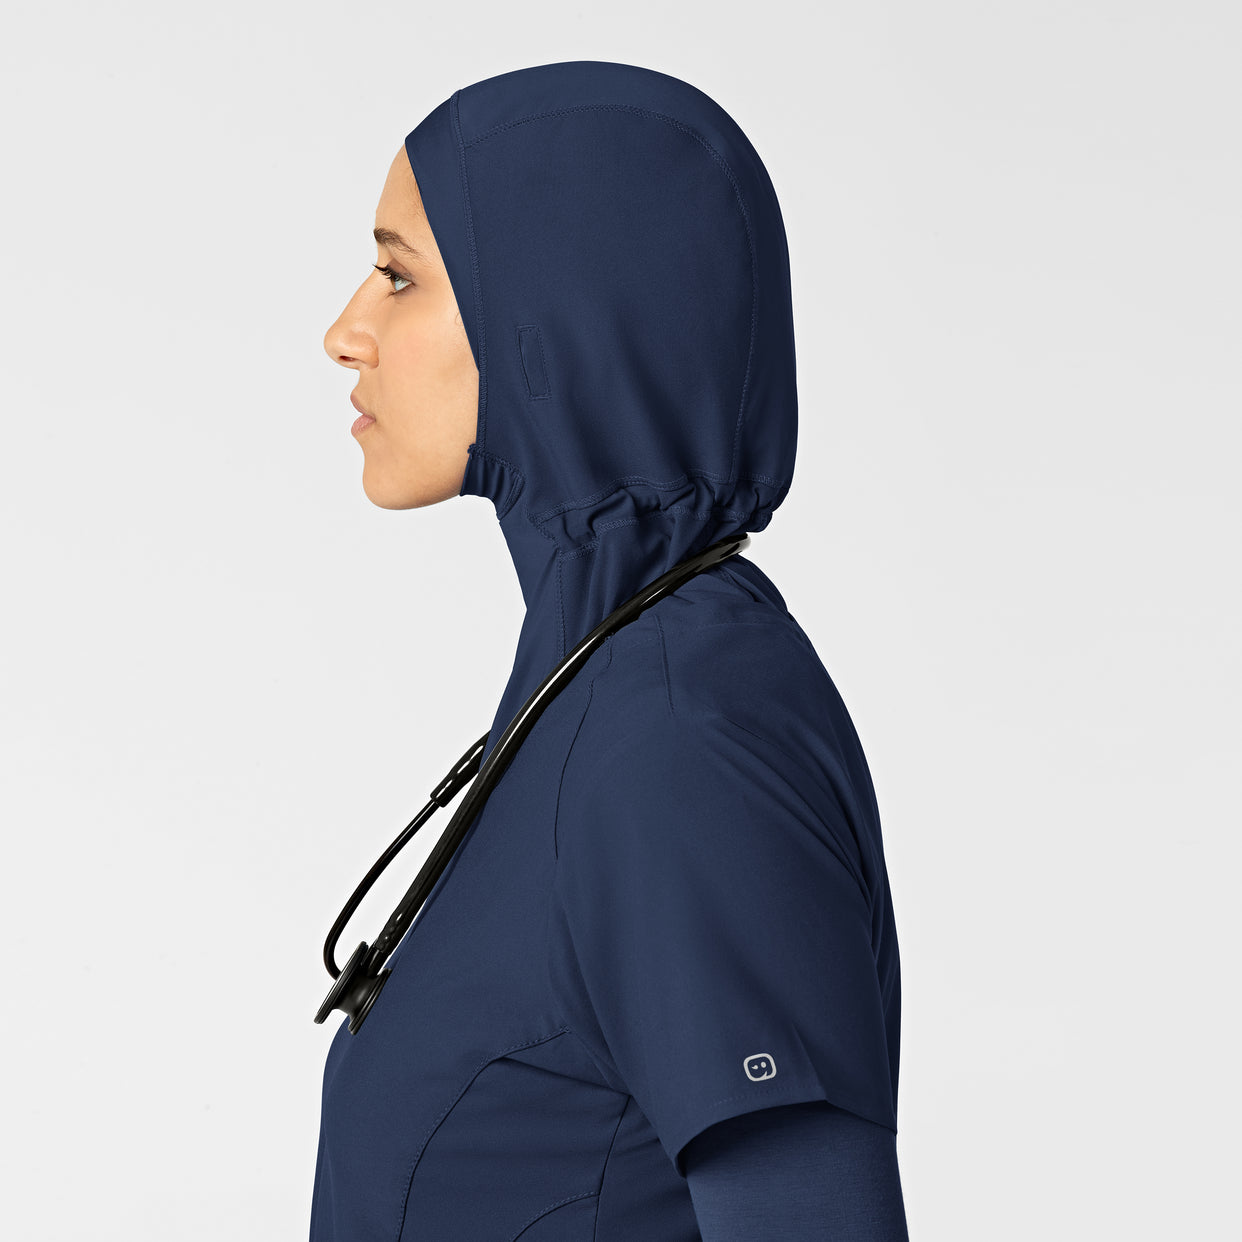 W123 Women's Hijab Navy side detail 1